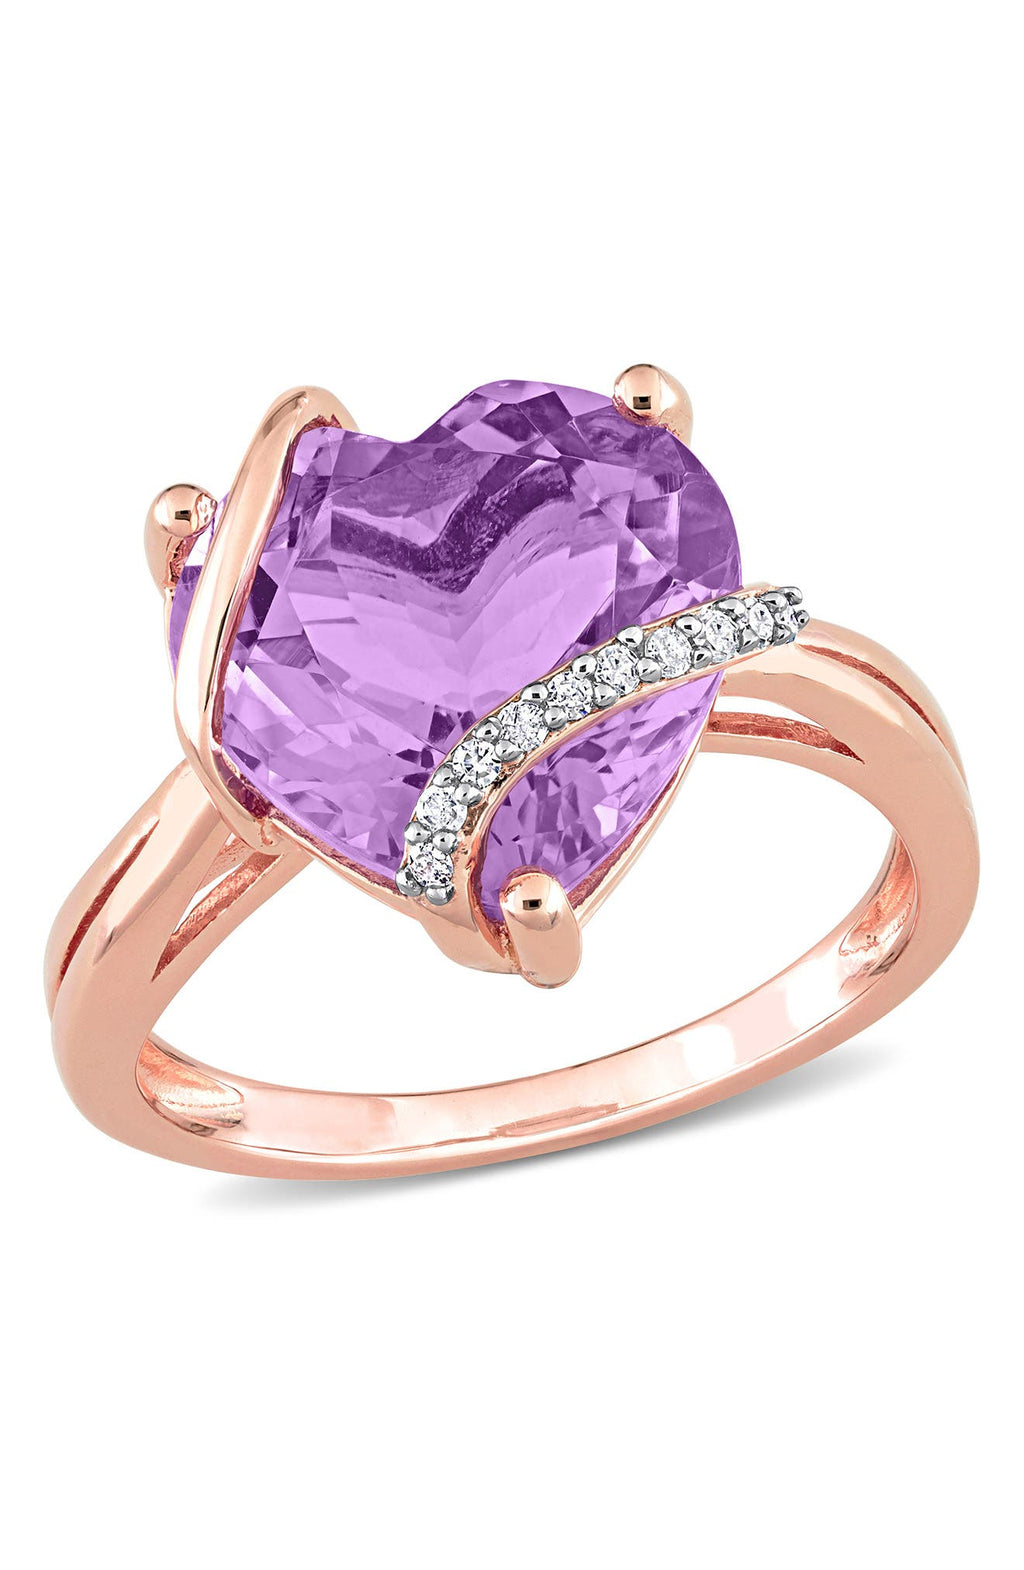 DELMAR 10K Rose Gold Amethyst Heart & Pavé Diamond Ring, Main, color, PURPLE